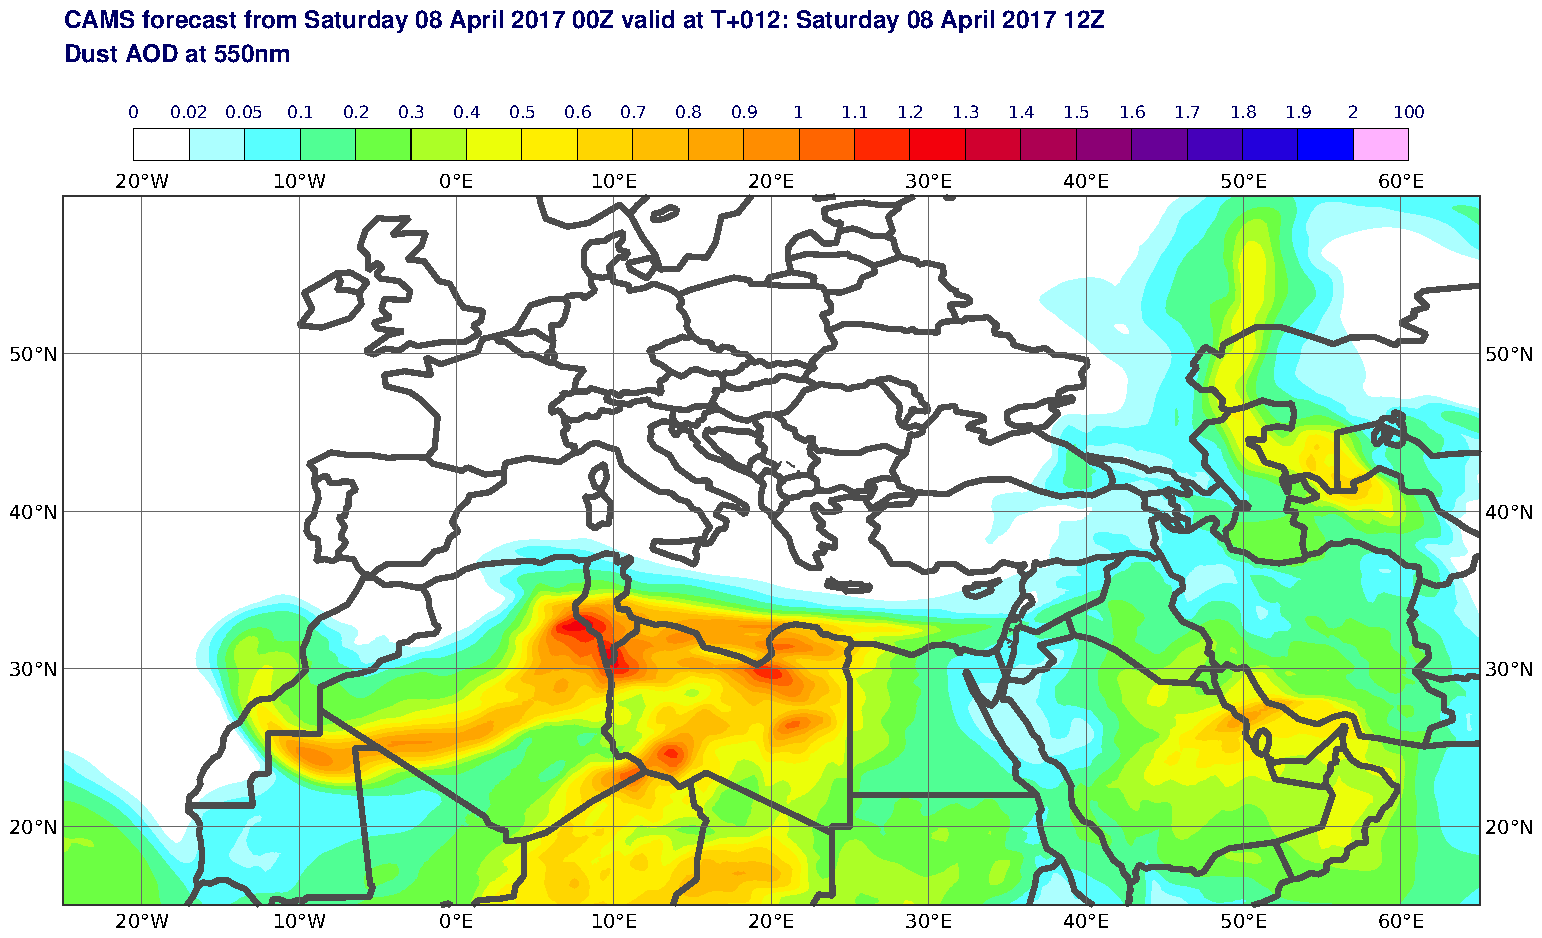 Dust AOD at 550nm valid at T12 - 2017-04-08 12:00